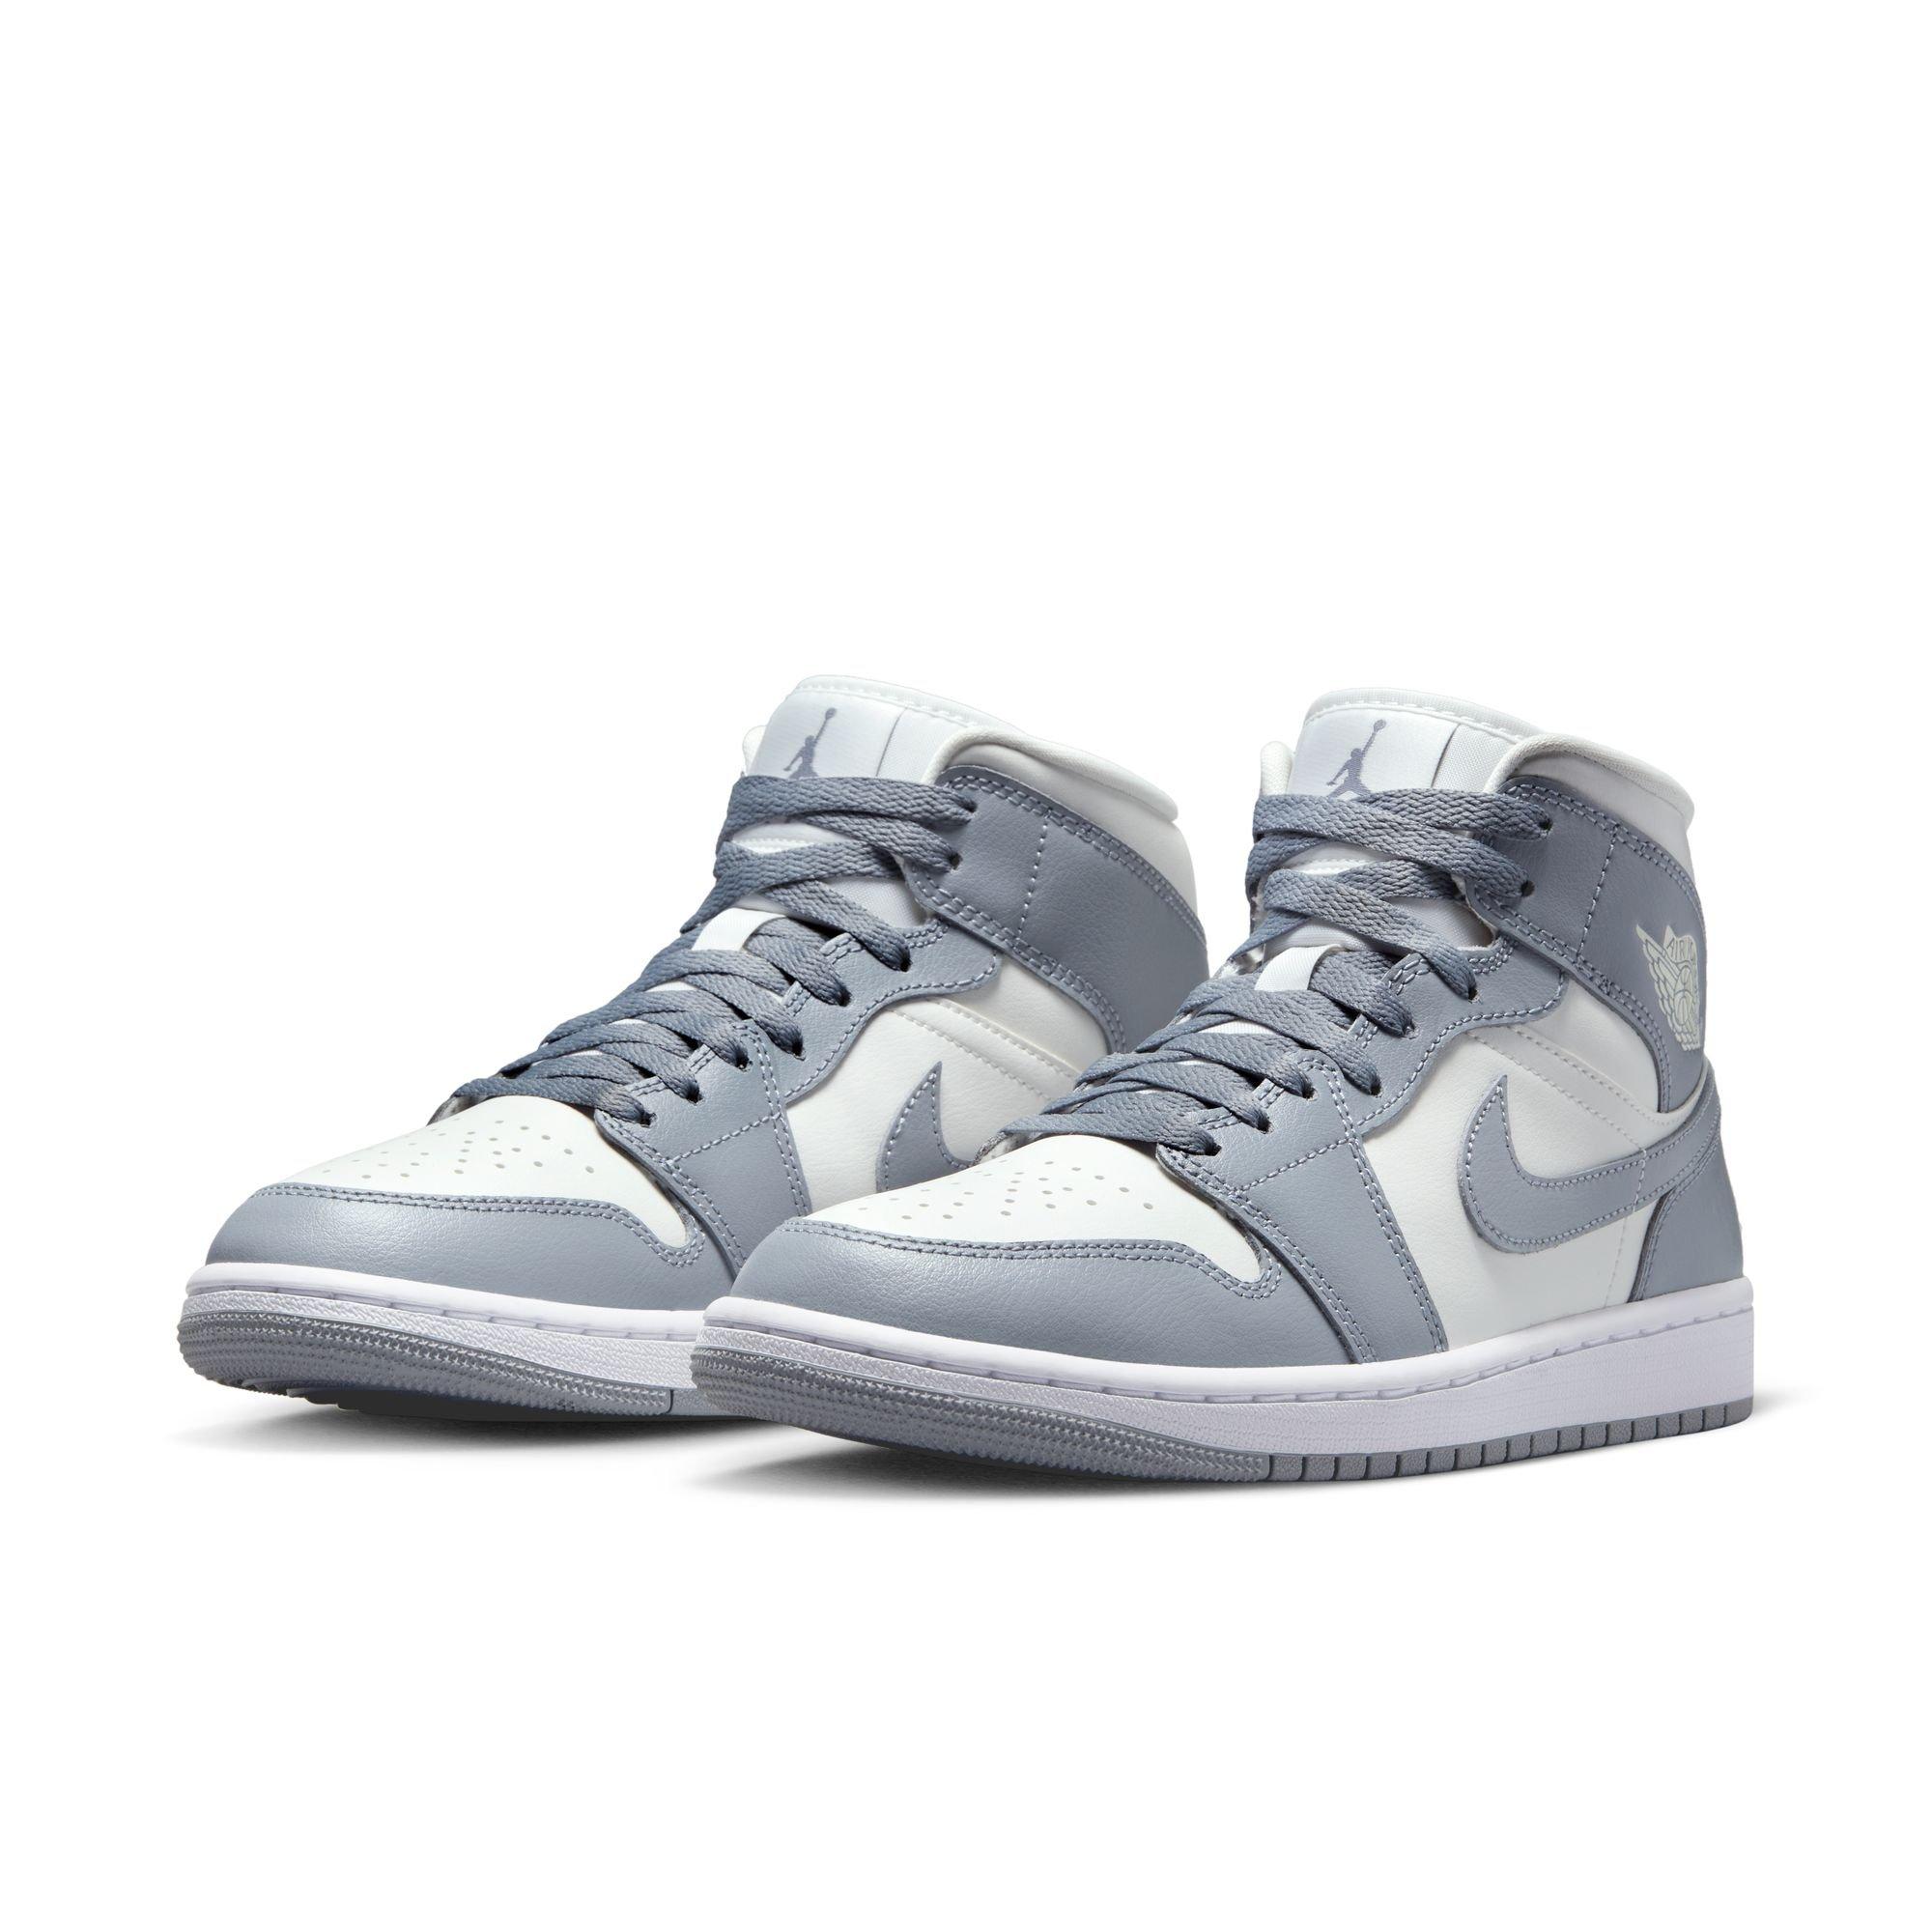 Air Jordan 1 Mid Women's Shoes, by Nike Size 8 (White)